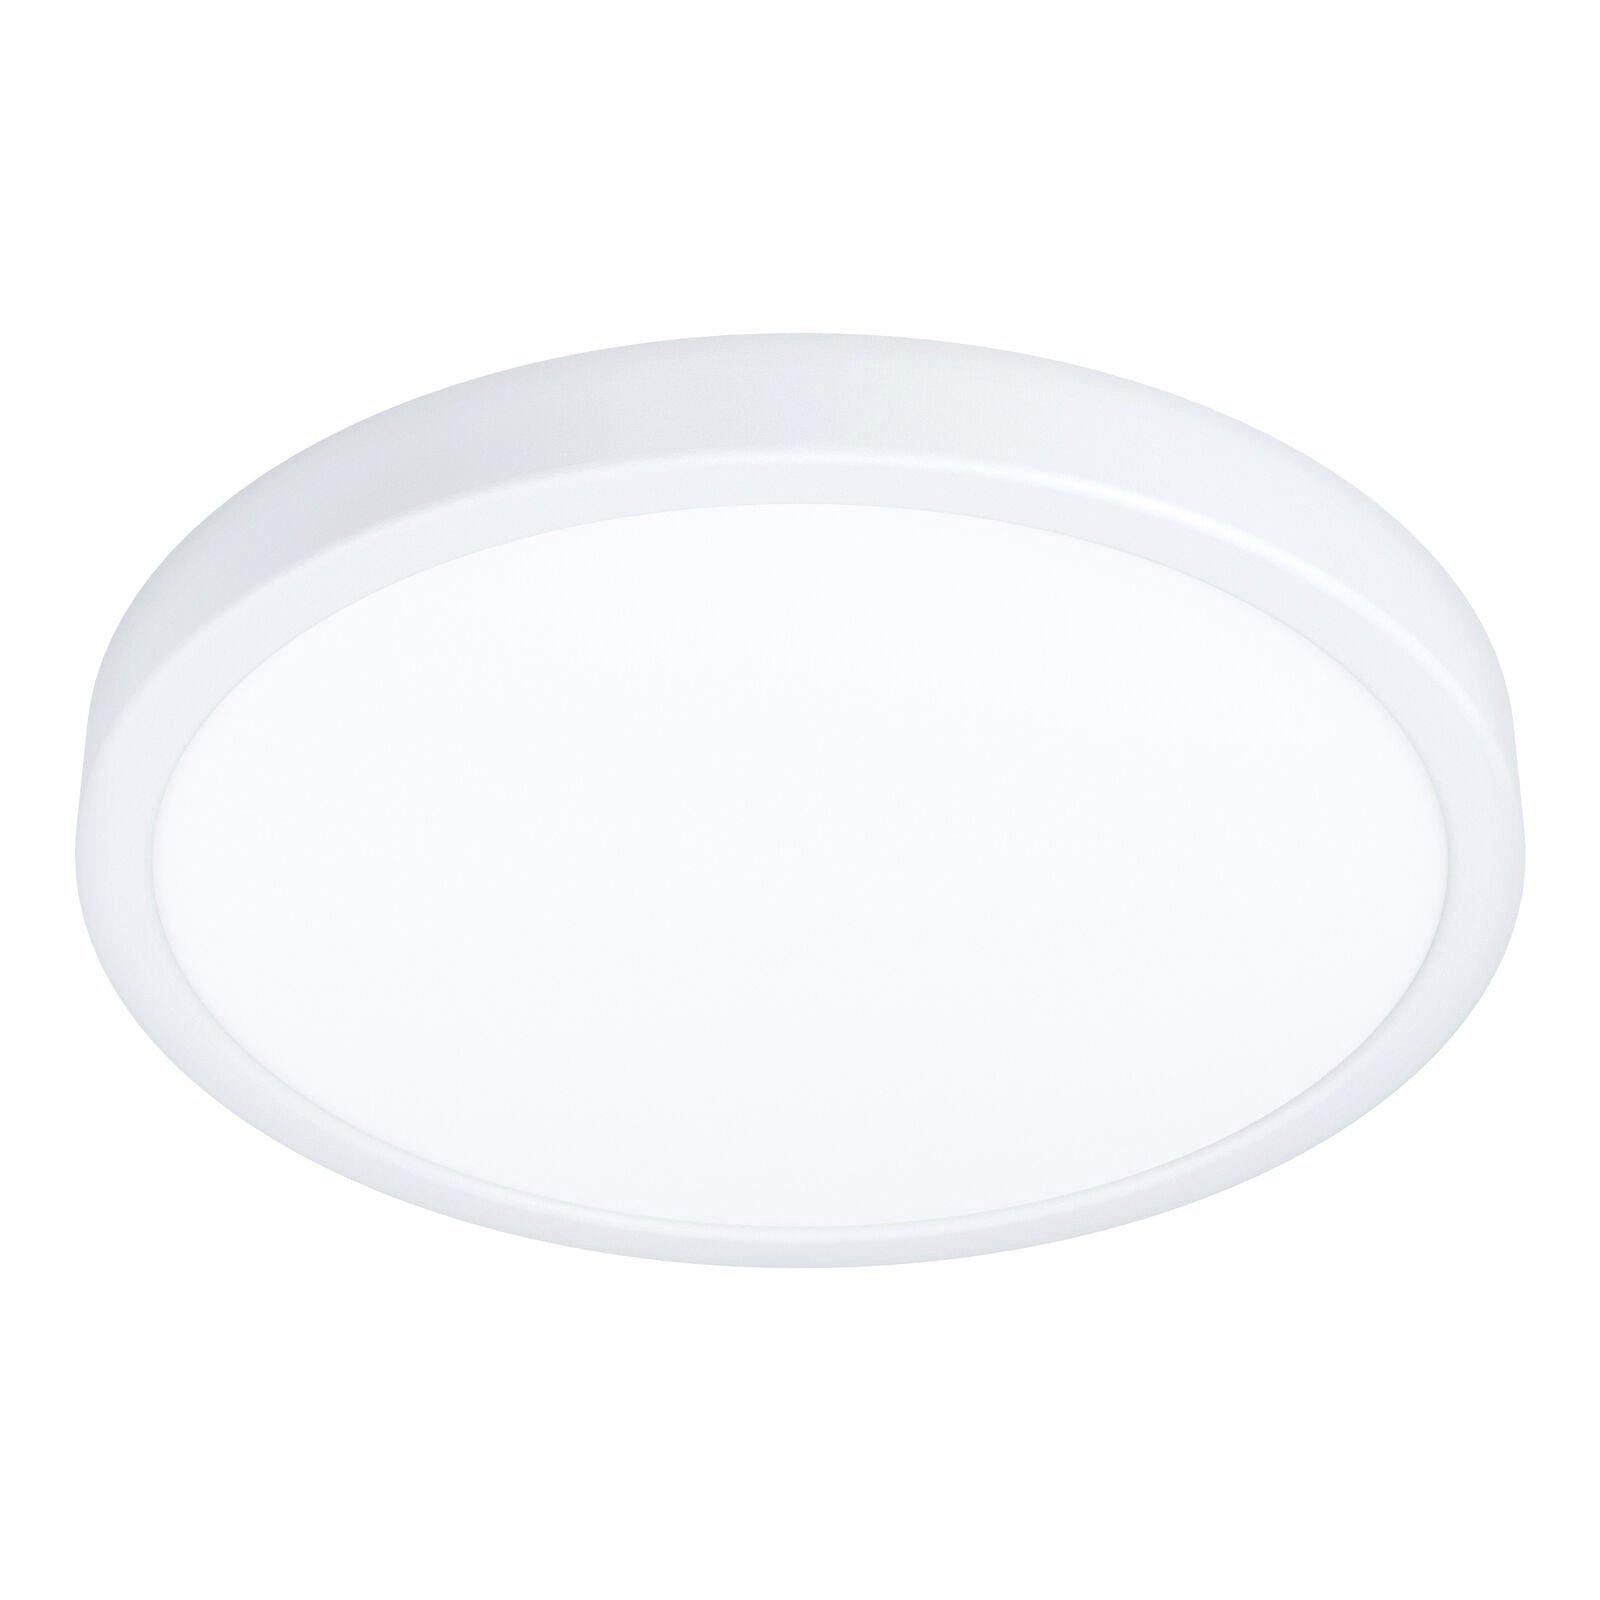 Wall Flush Ceiling Light Colour White Shade White Plastic Bulb LED 20W Included